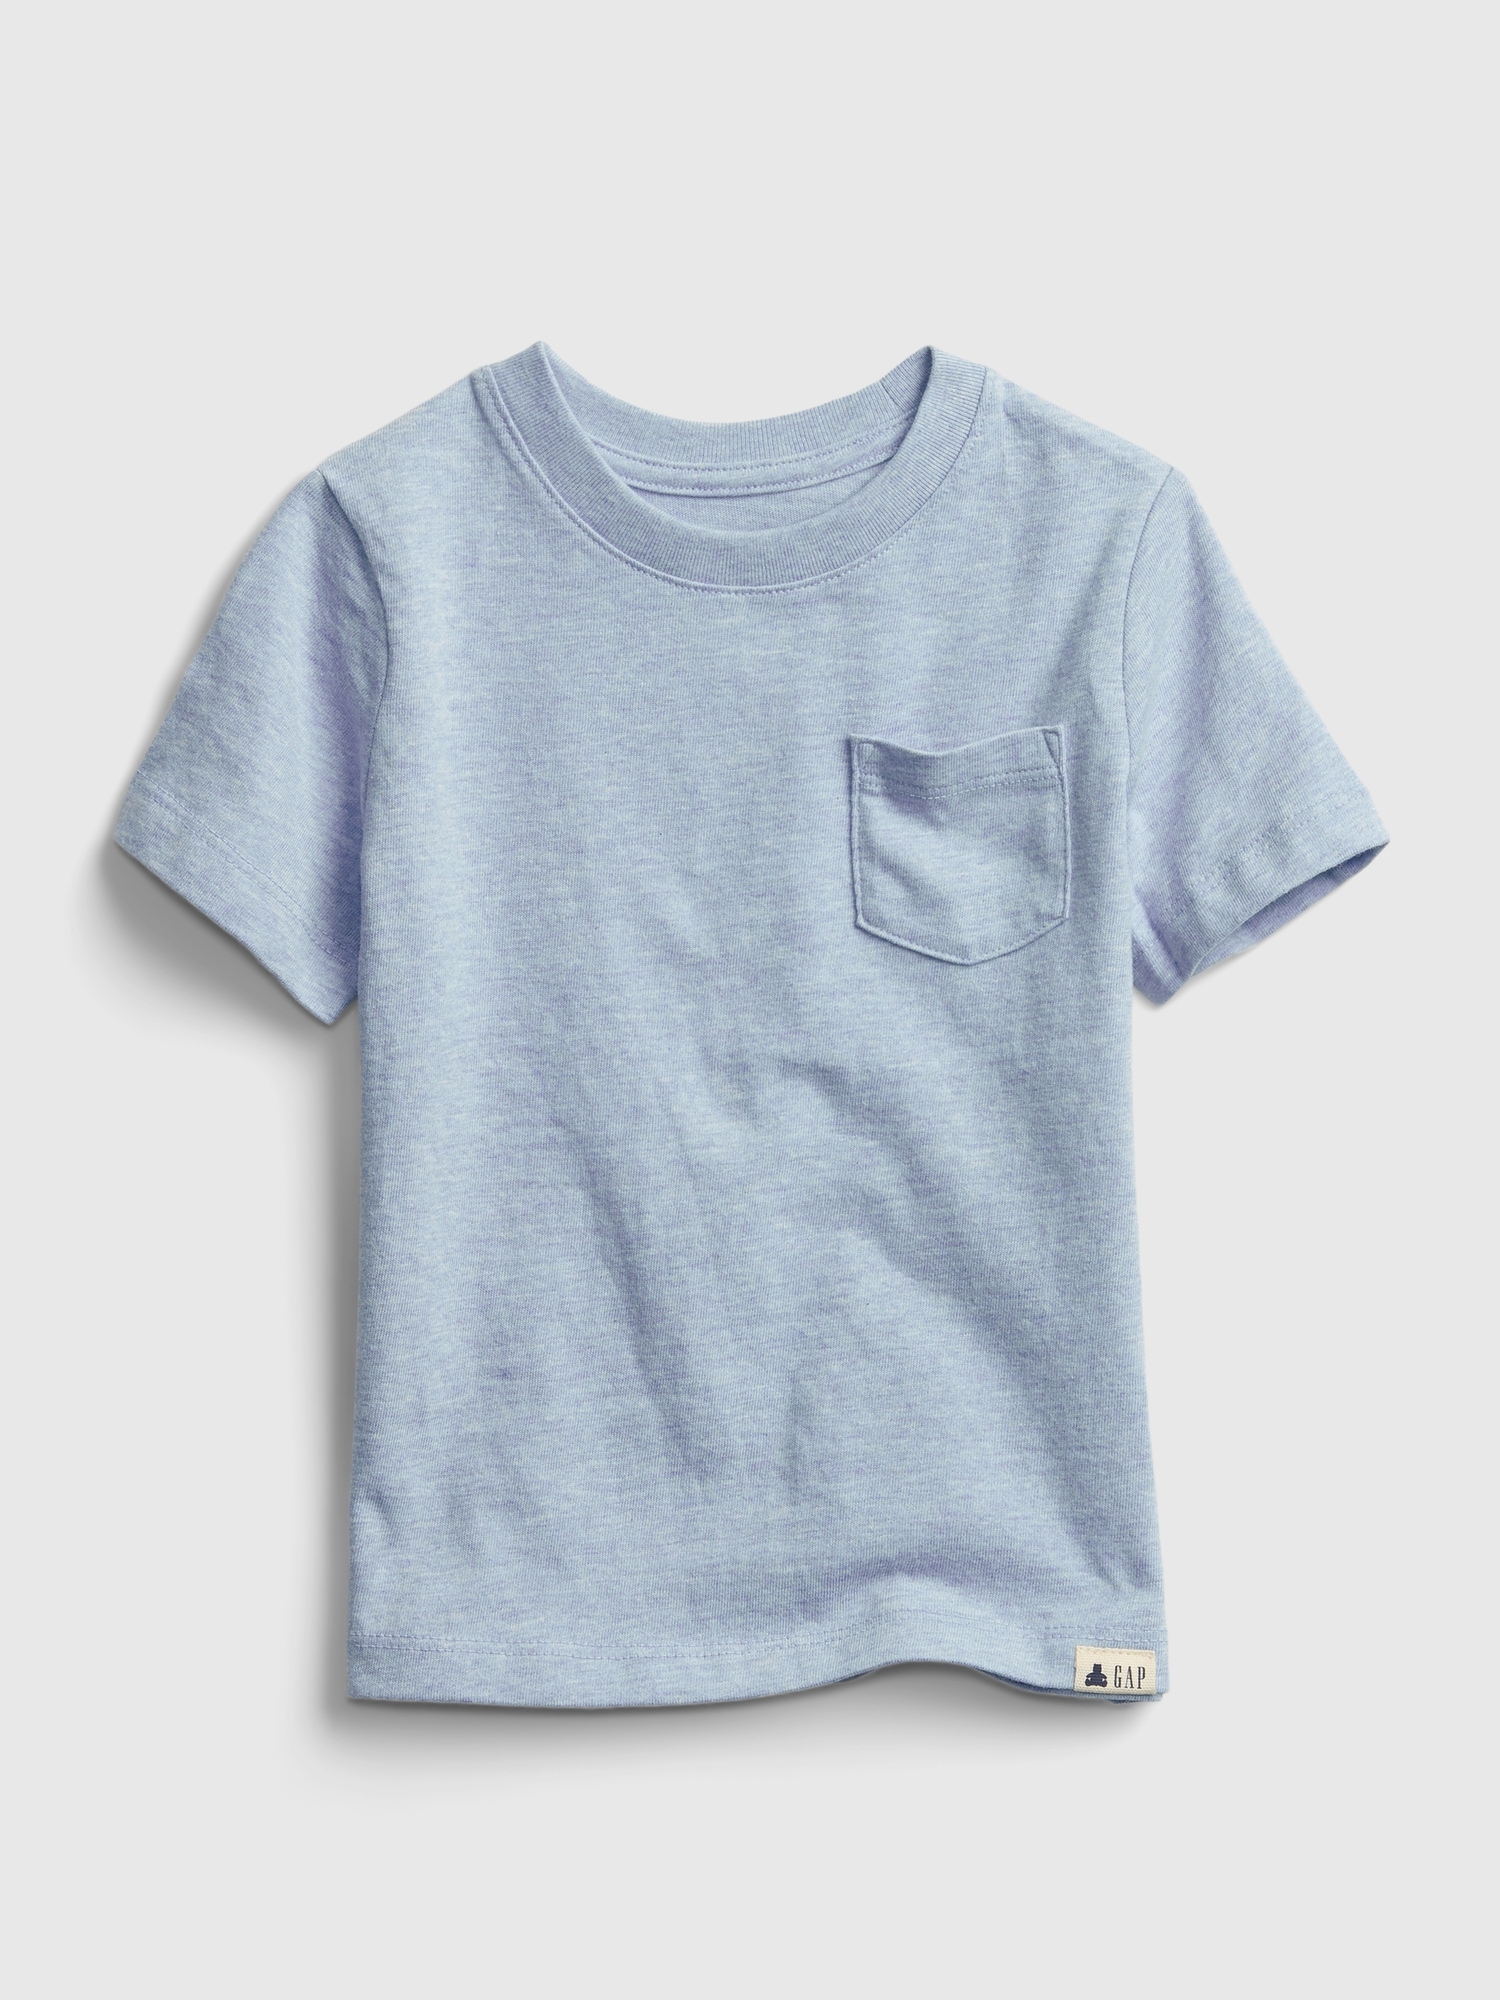 Gap Toddler Mix and Match Pocket T-Shirt blue. 1